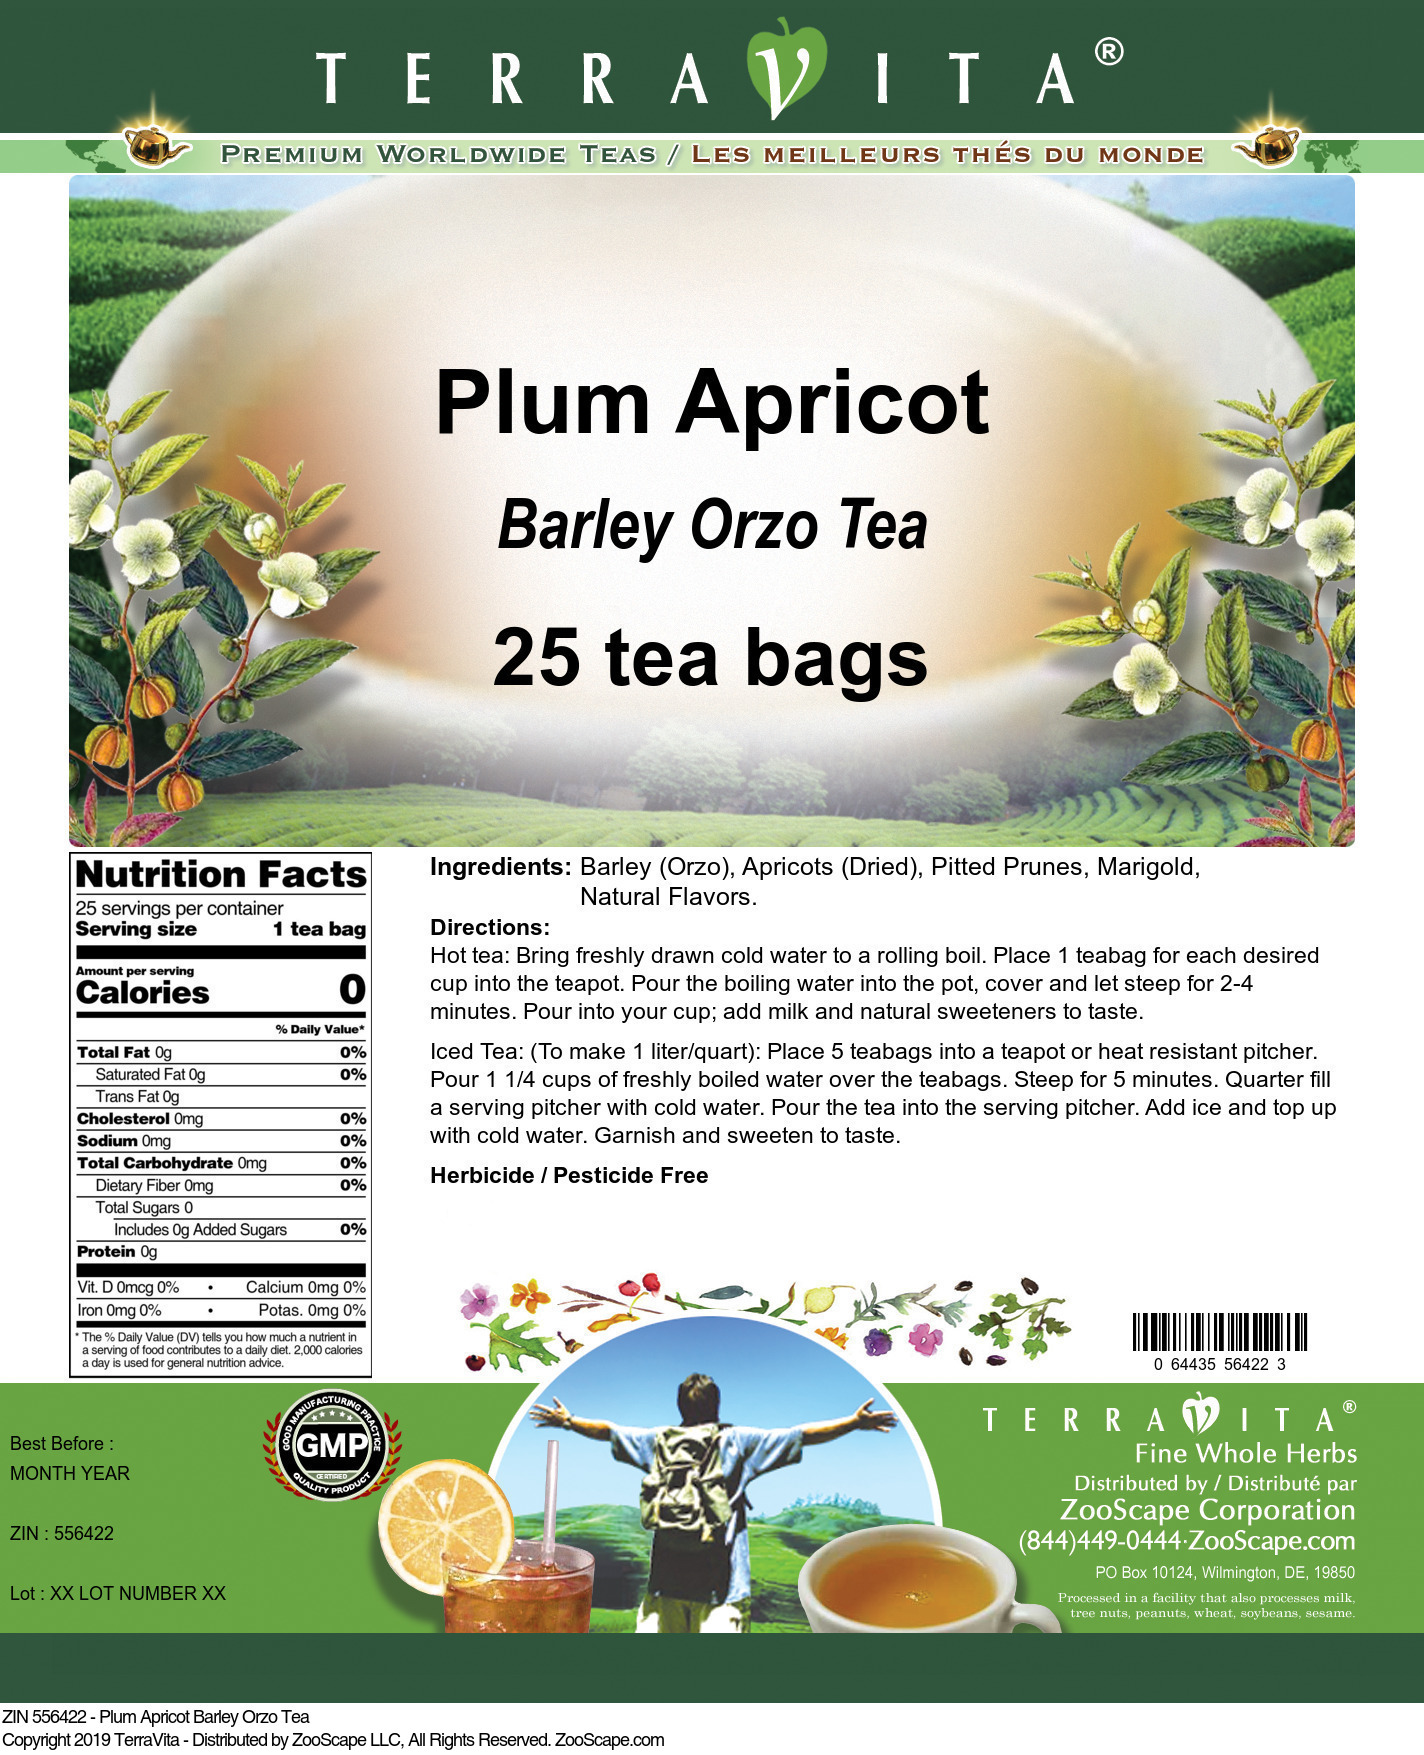 Plum Apricot Barley Orzo Tea - Label